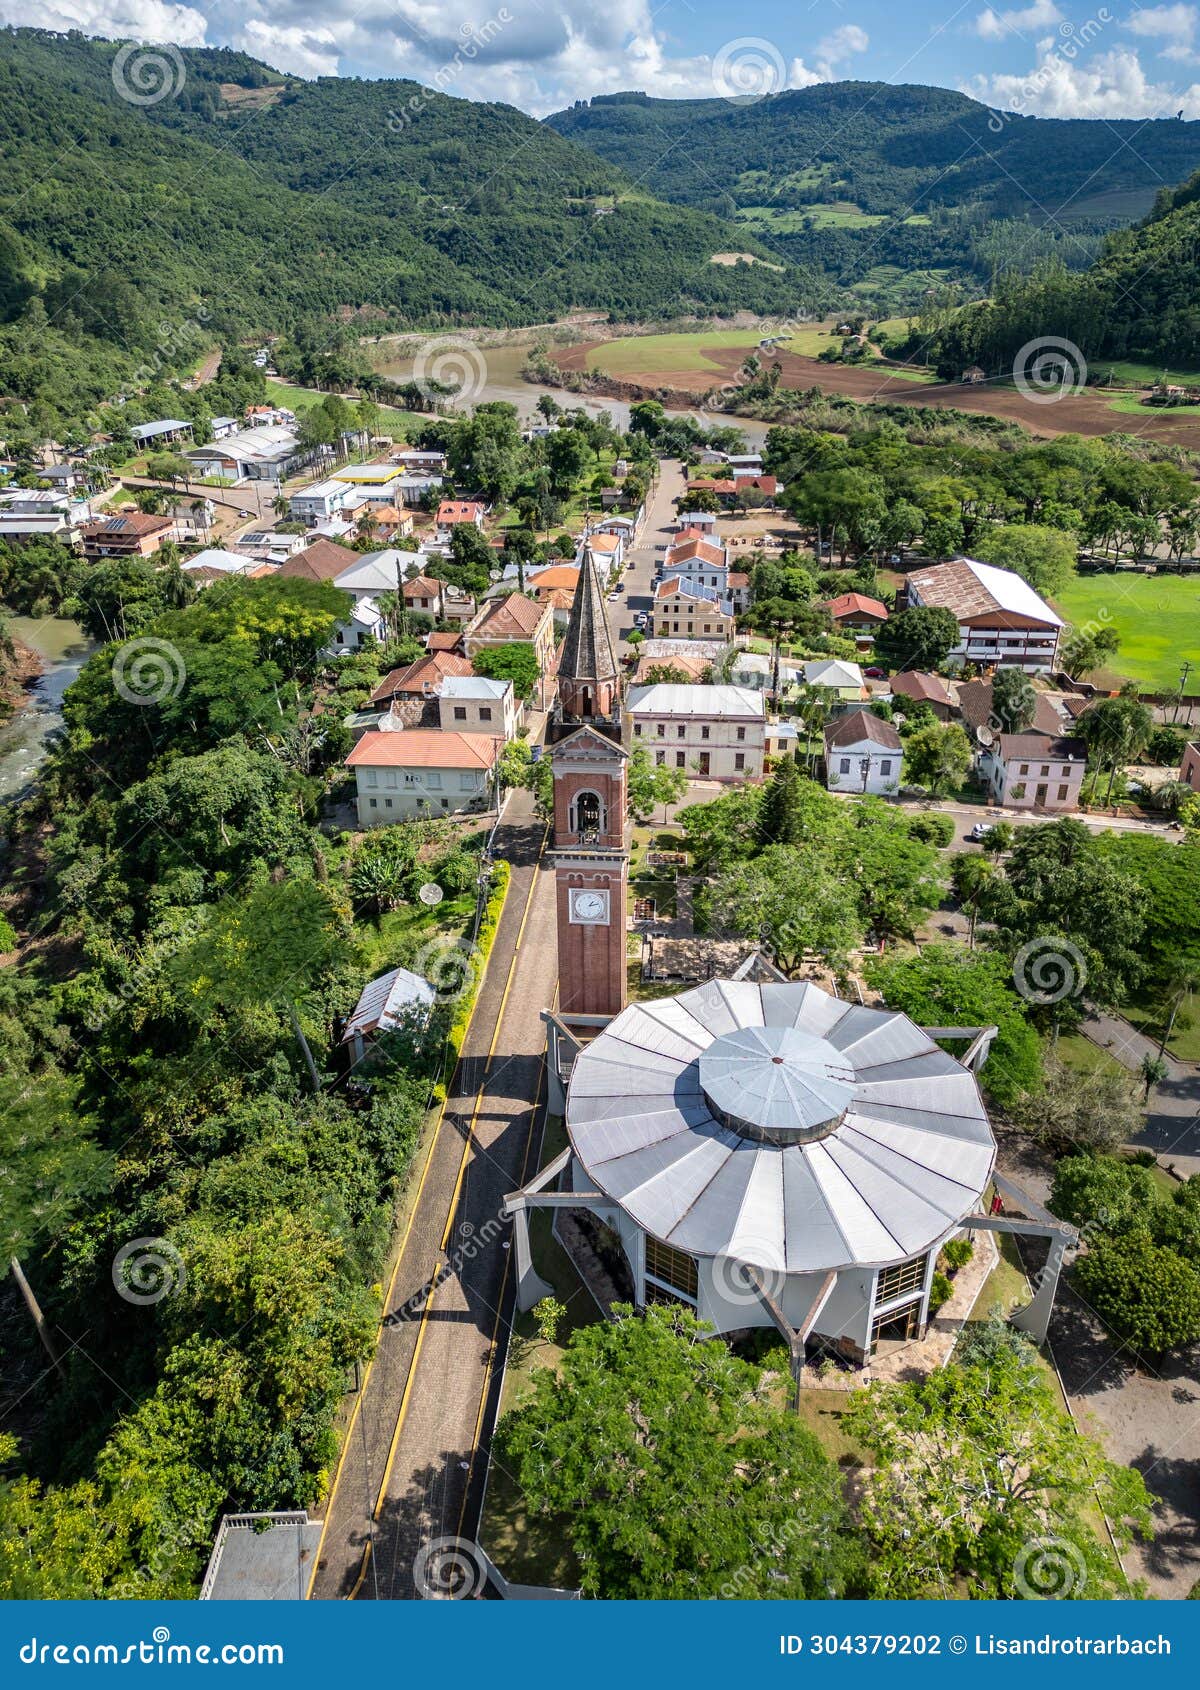 aerial view of santa tereza village